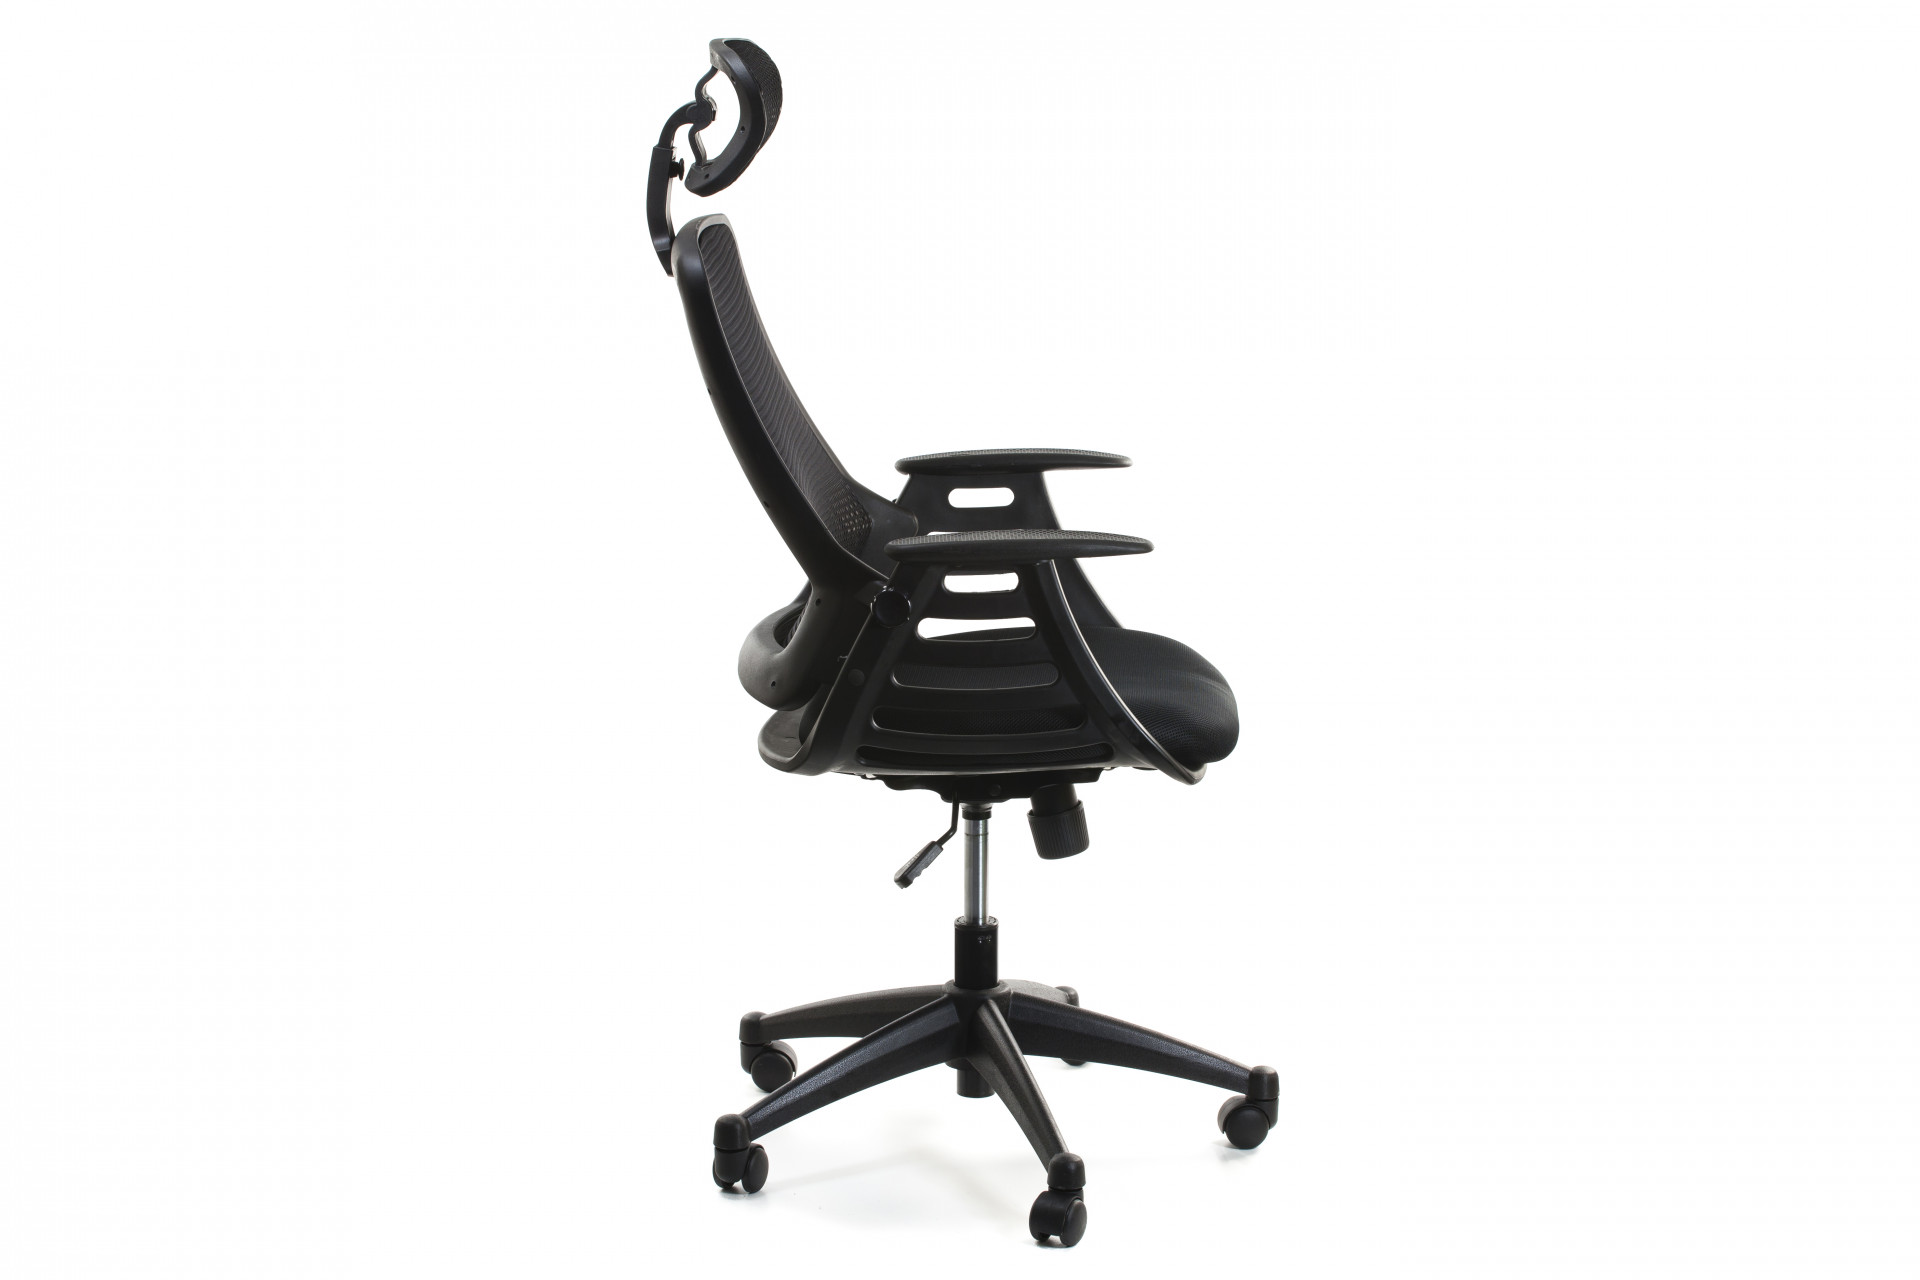 Кресло офисное TPRO- MERANO headrest, Grey 27719